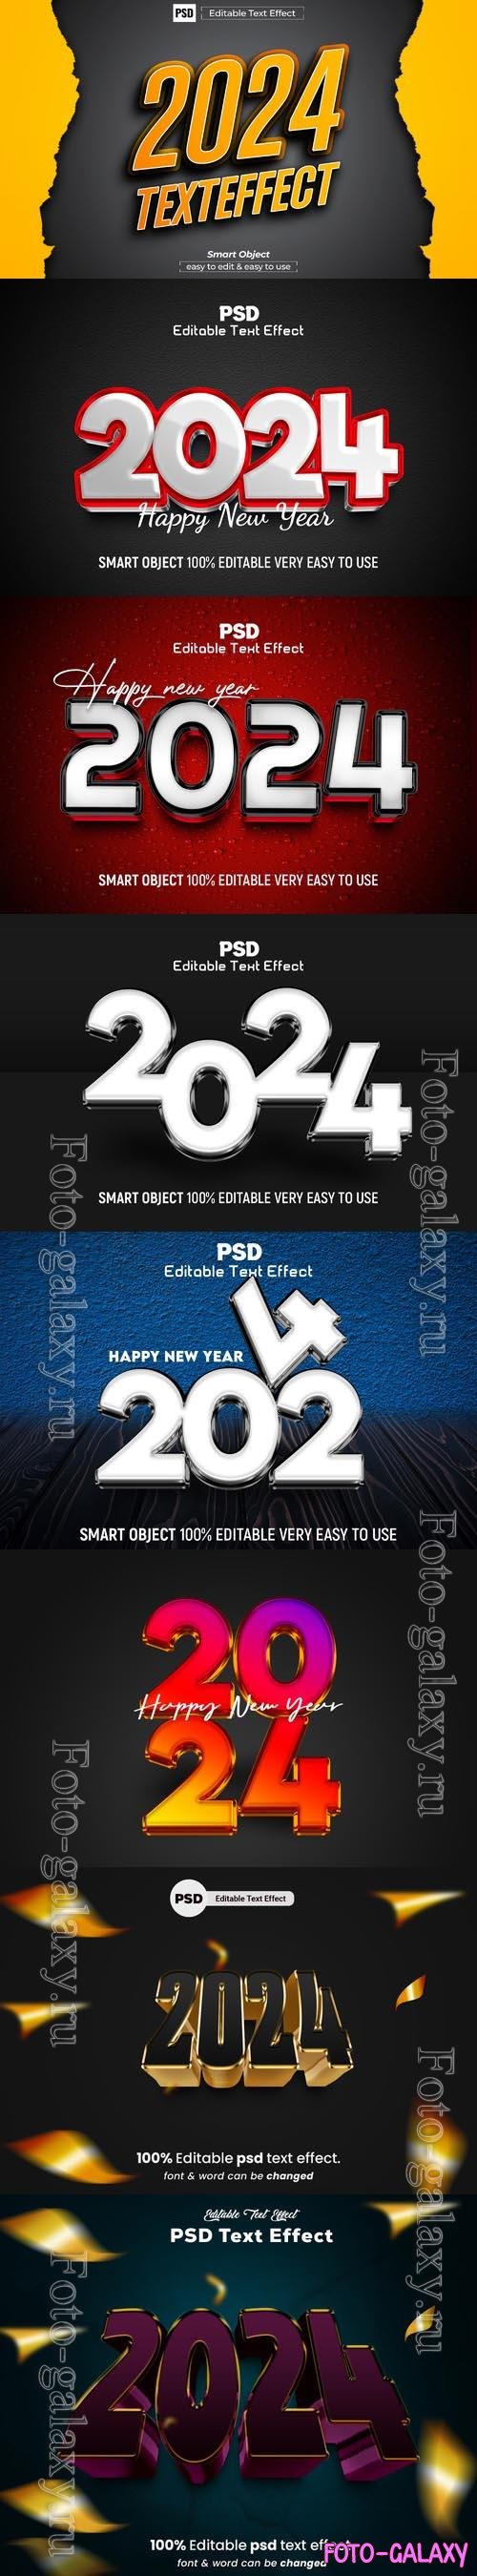 PSD new year 2024 3d editable text effect vol 4